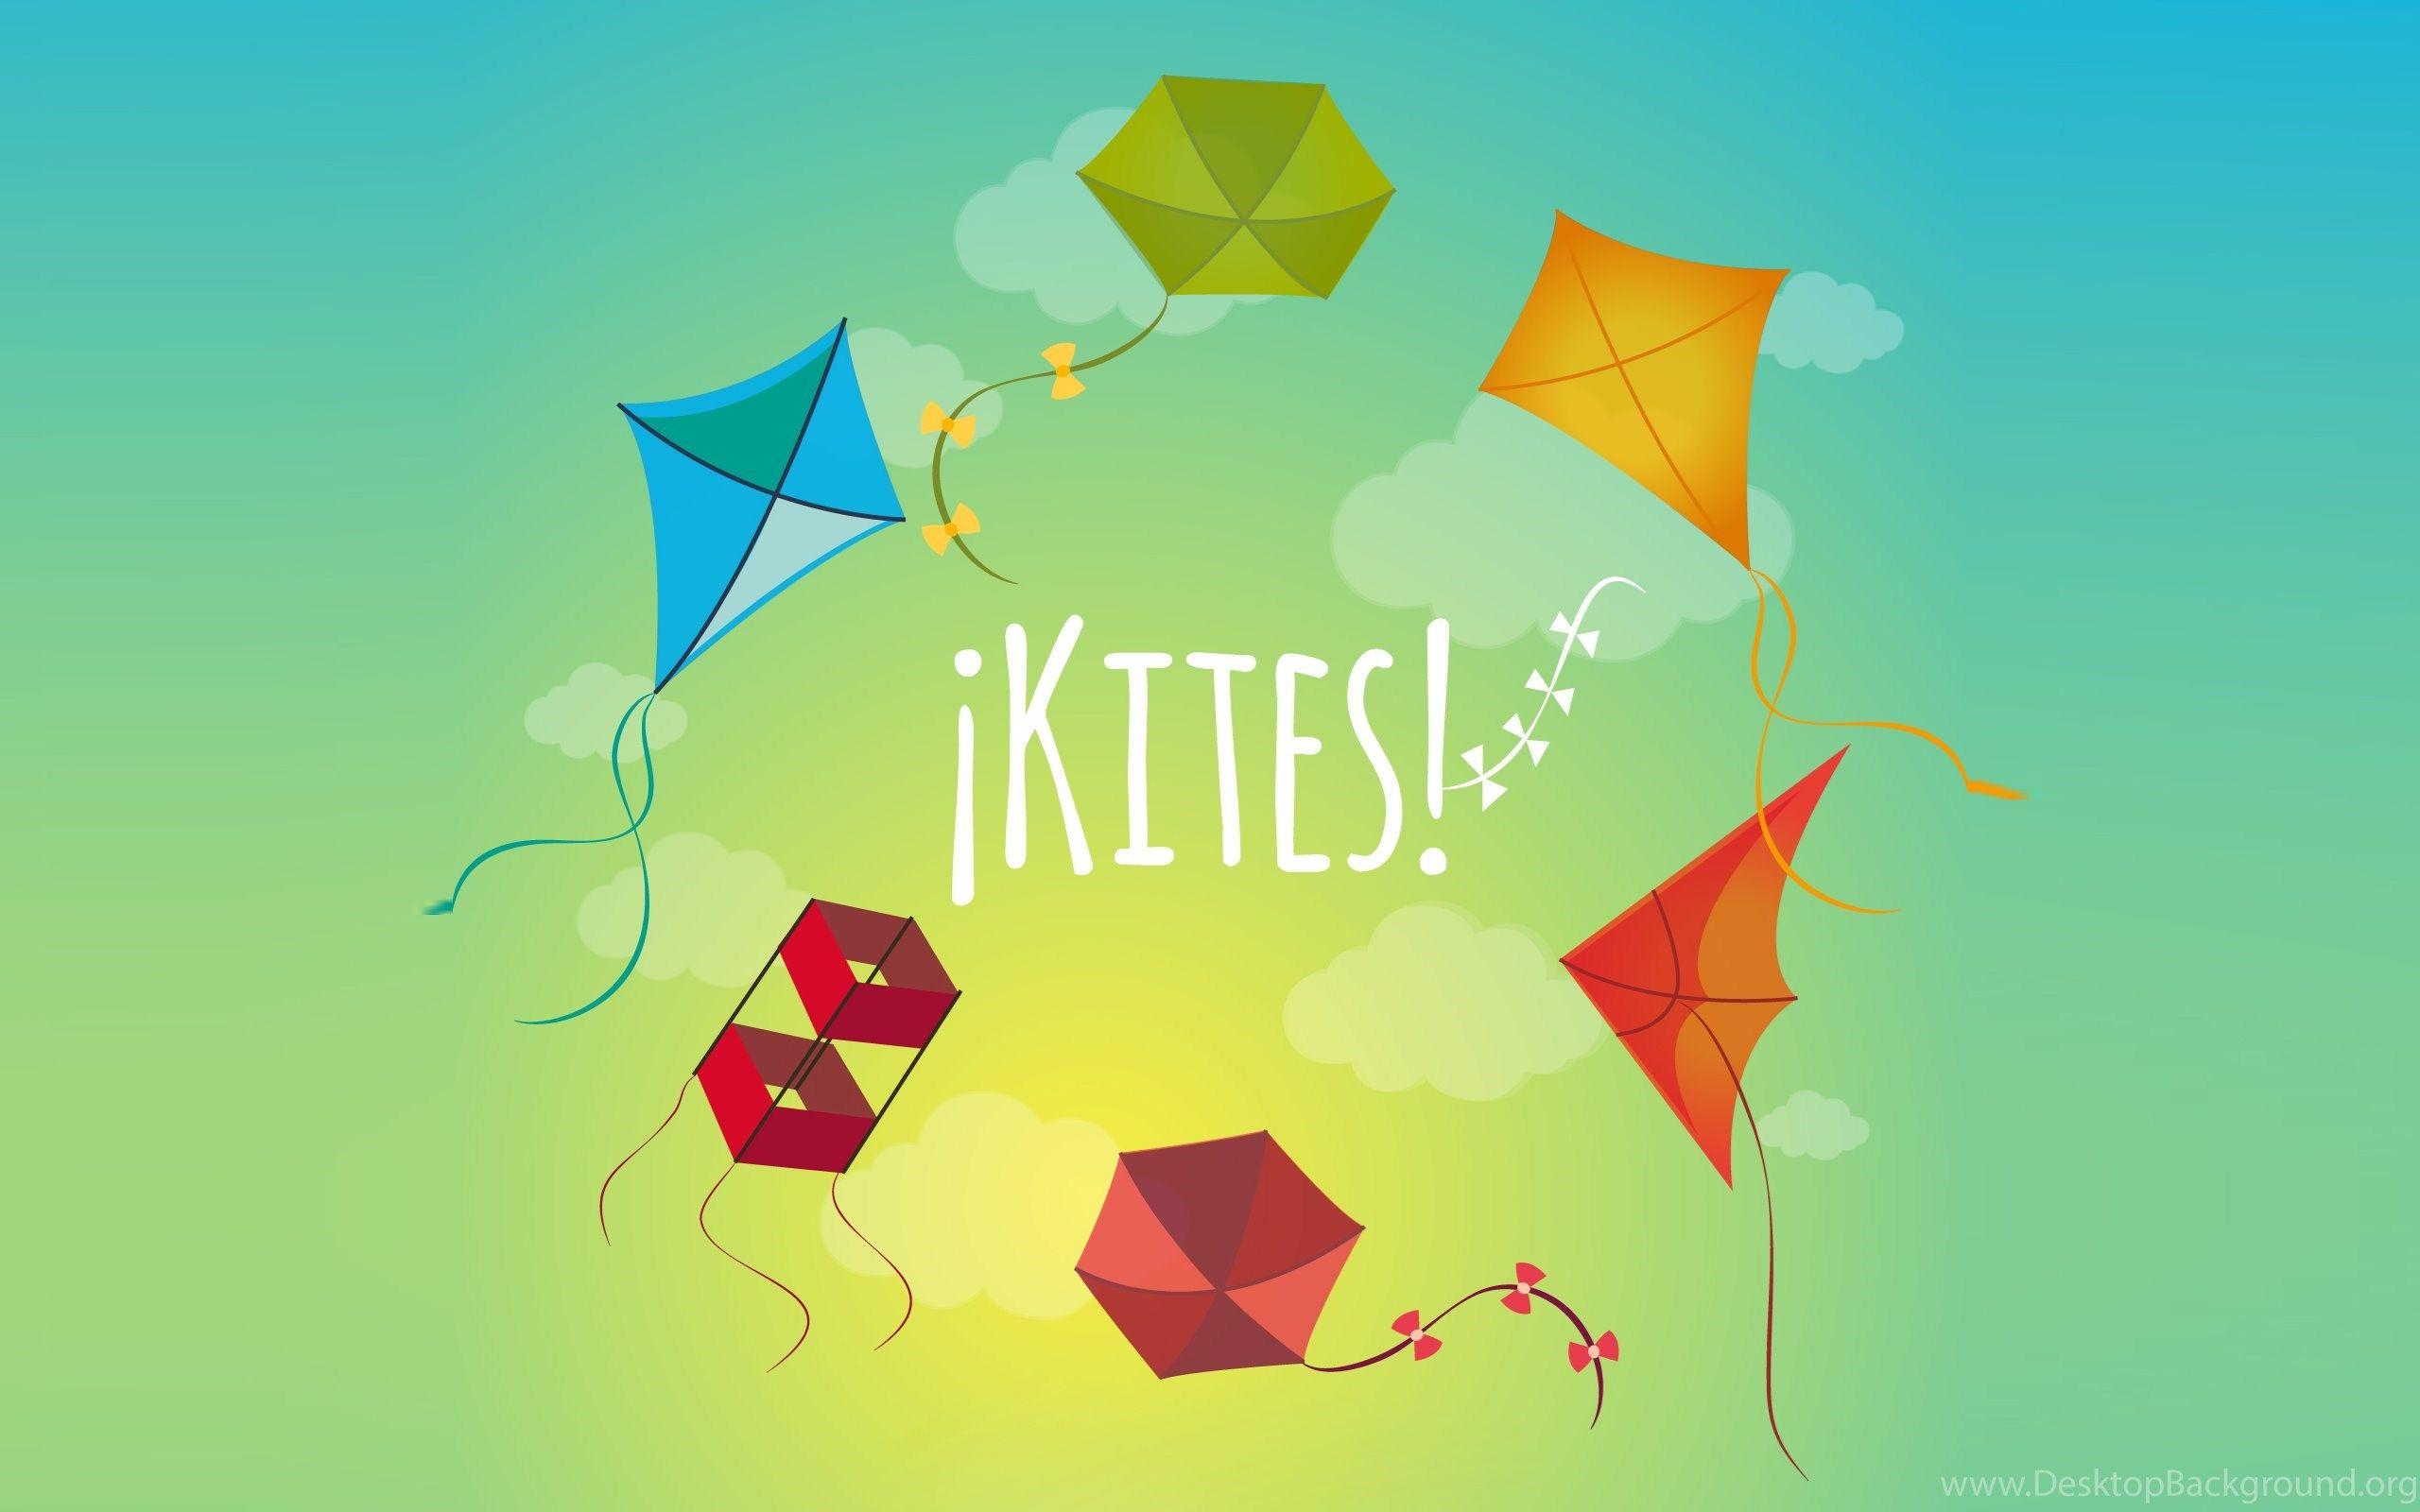 Happy Uttarayan Makar Sankranti Kite Flying Day Wallpaper Desktop Background